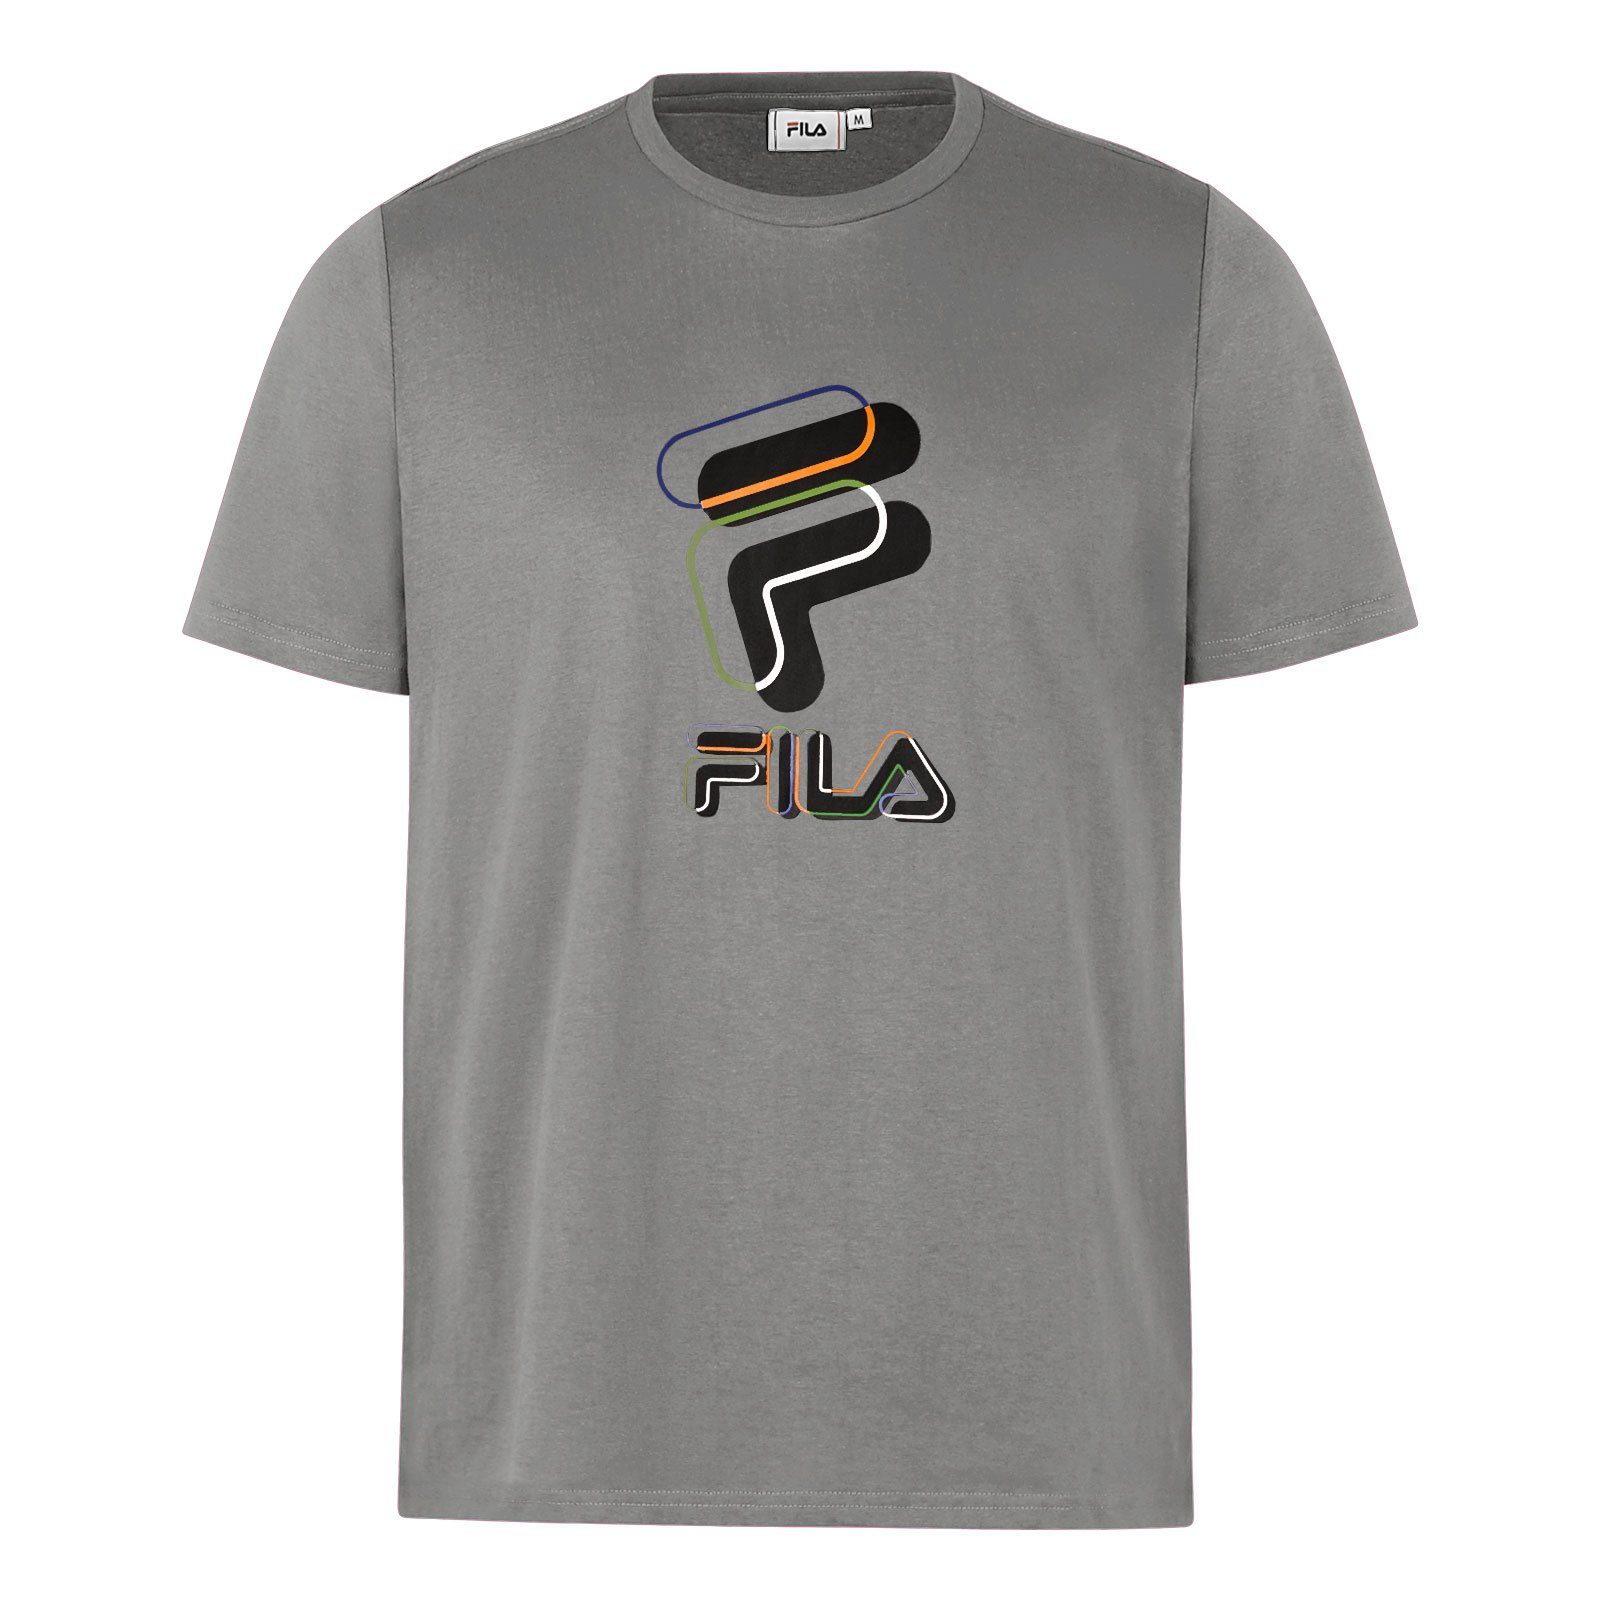 Fila stylischem mit Outline-FILA-Logo Tee 80028 gull Bibbiena T-Shirt